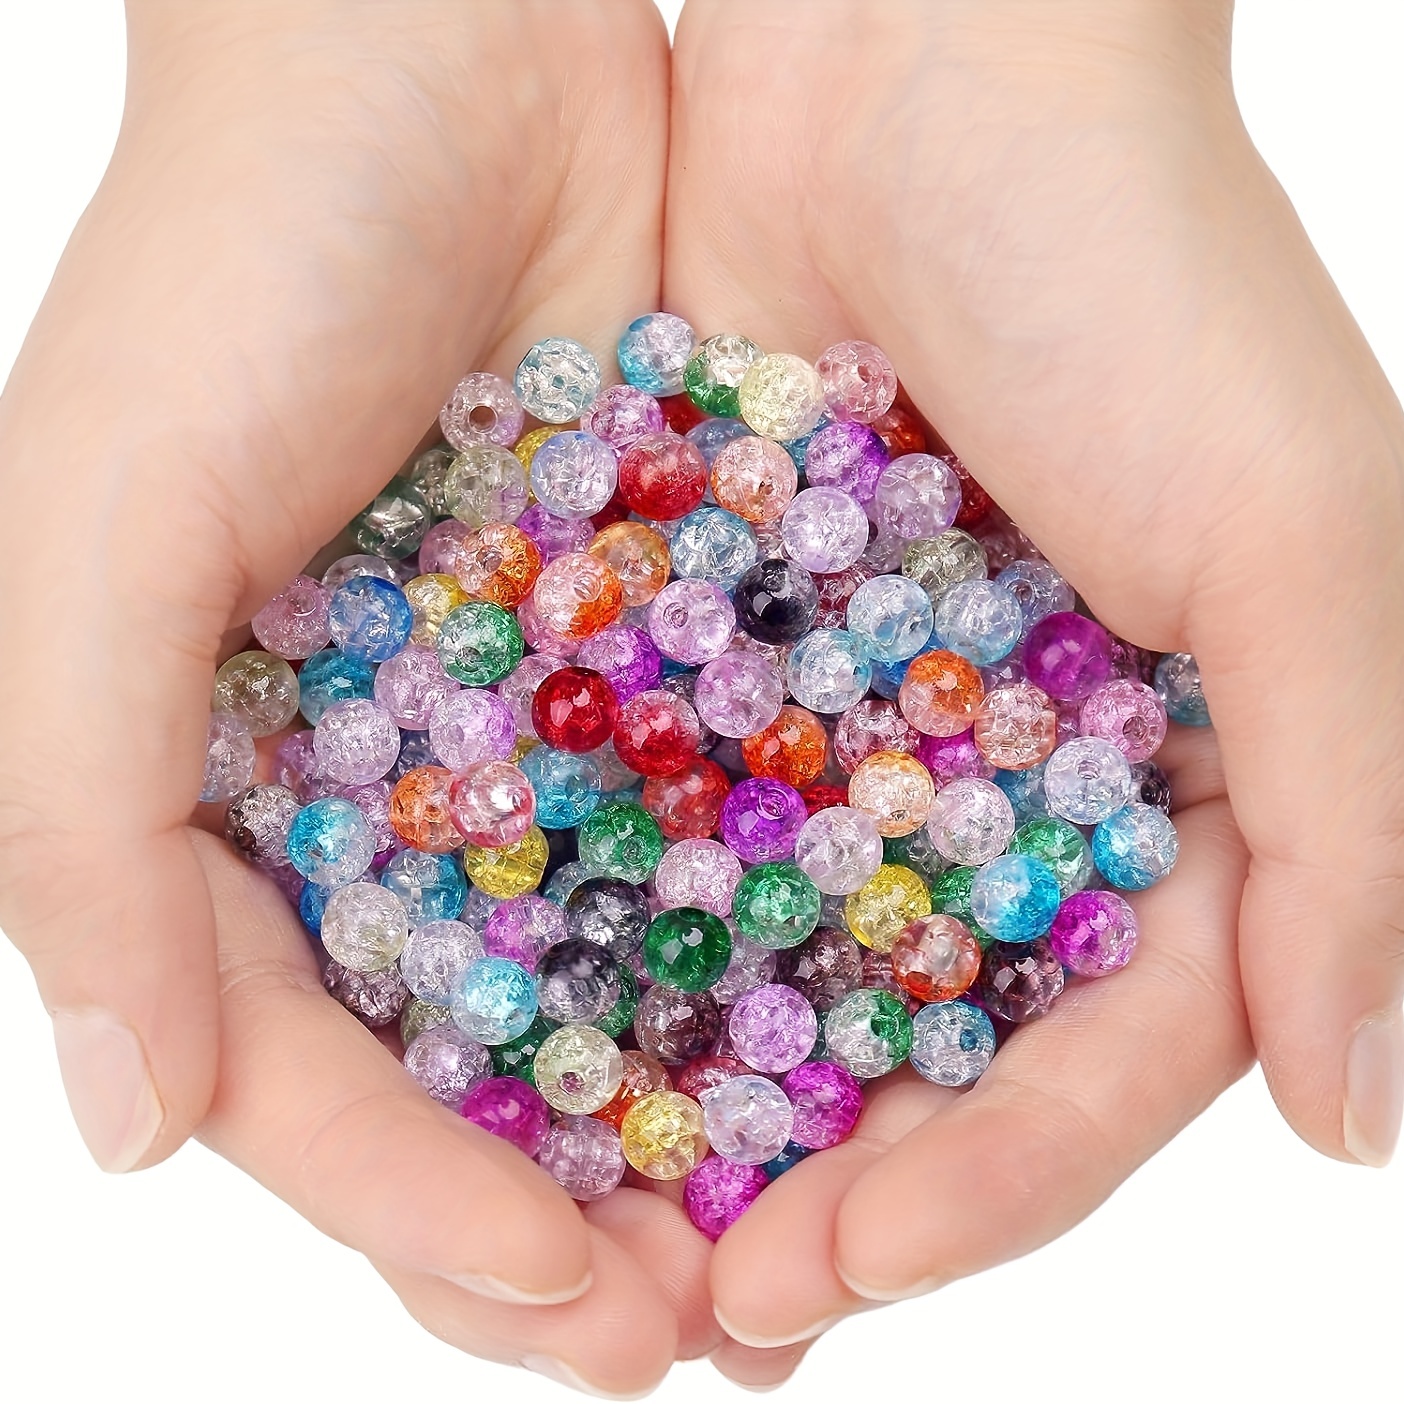 50pcs Bubblegum Beads, Cow Beads Bubblegum Beads 20mm Bulk, Focal Beads 20mm Beads Bubble Beads Round Beads for Jewelry Making Jumbo Beads Chunky